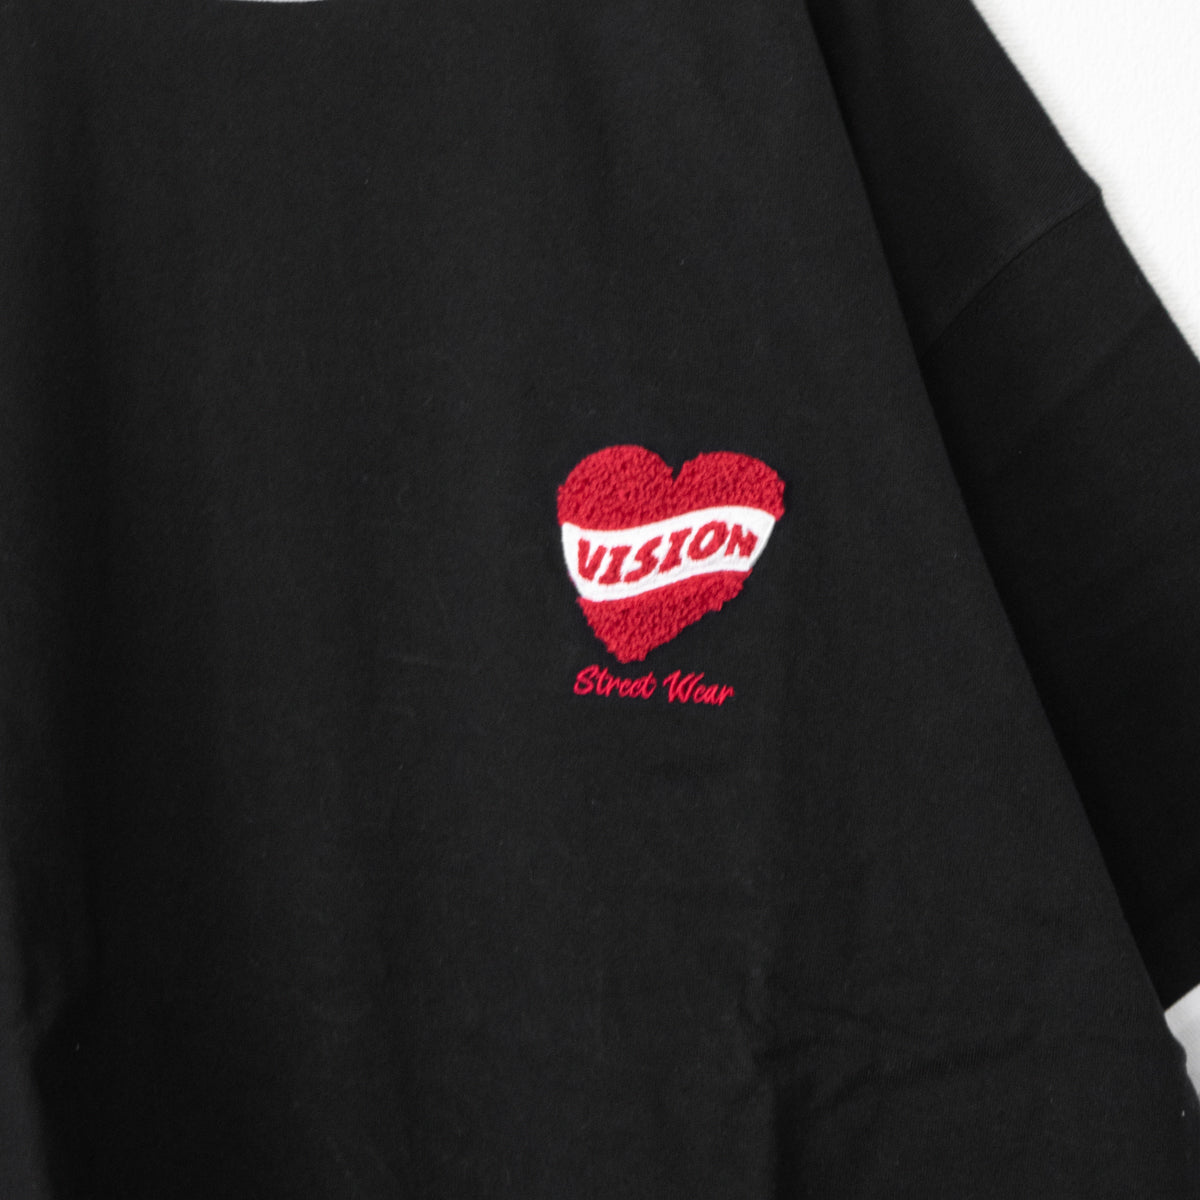 VISION STREET WEAR ハートサガラ 半袖Tシャツ BLACK